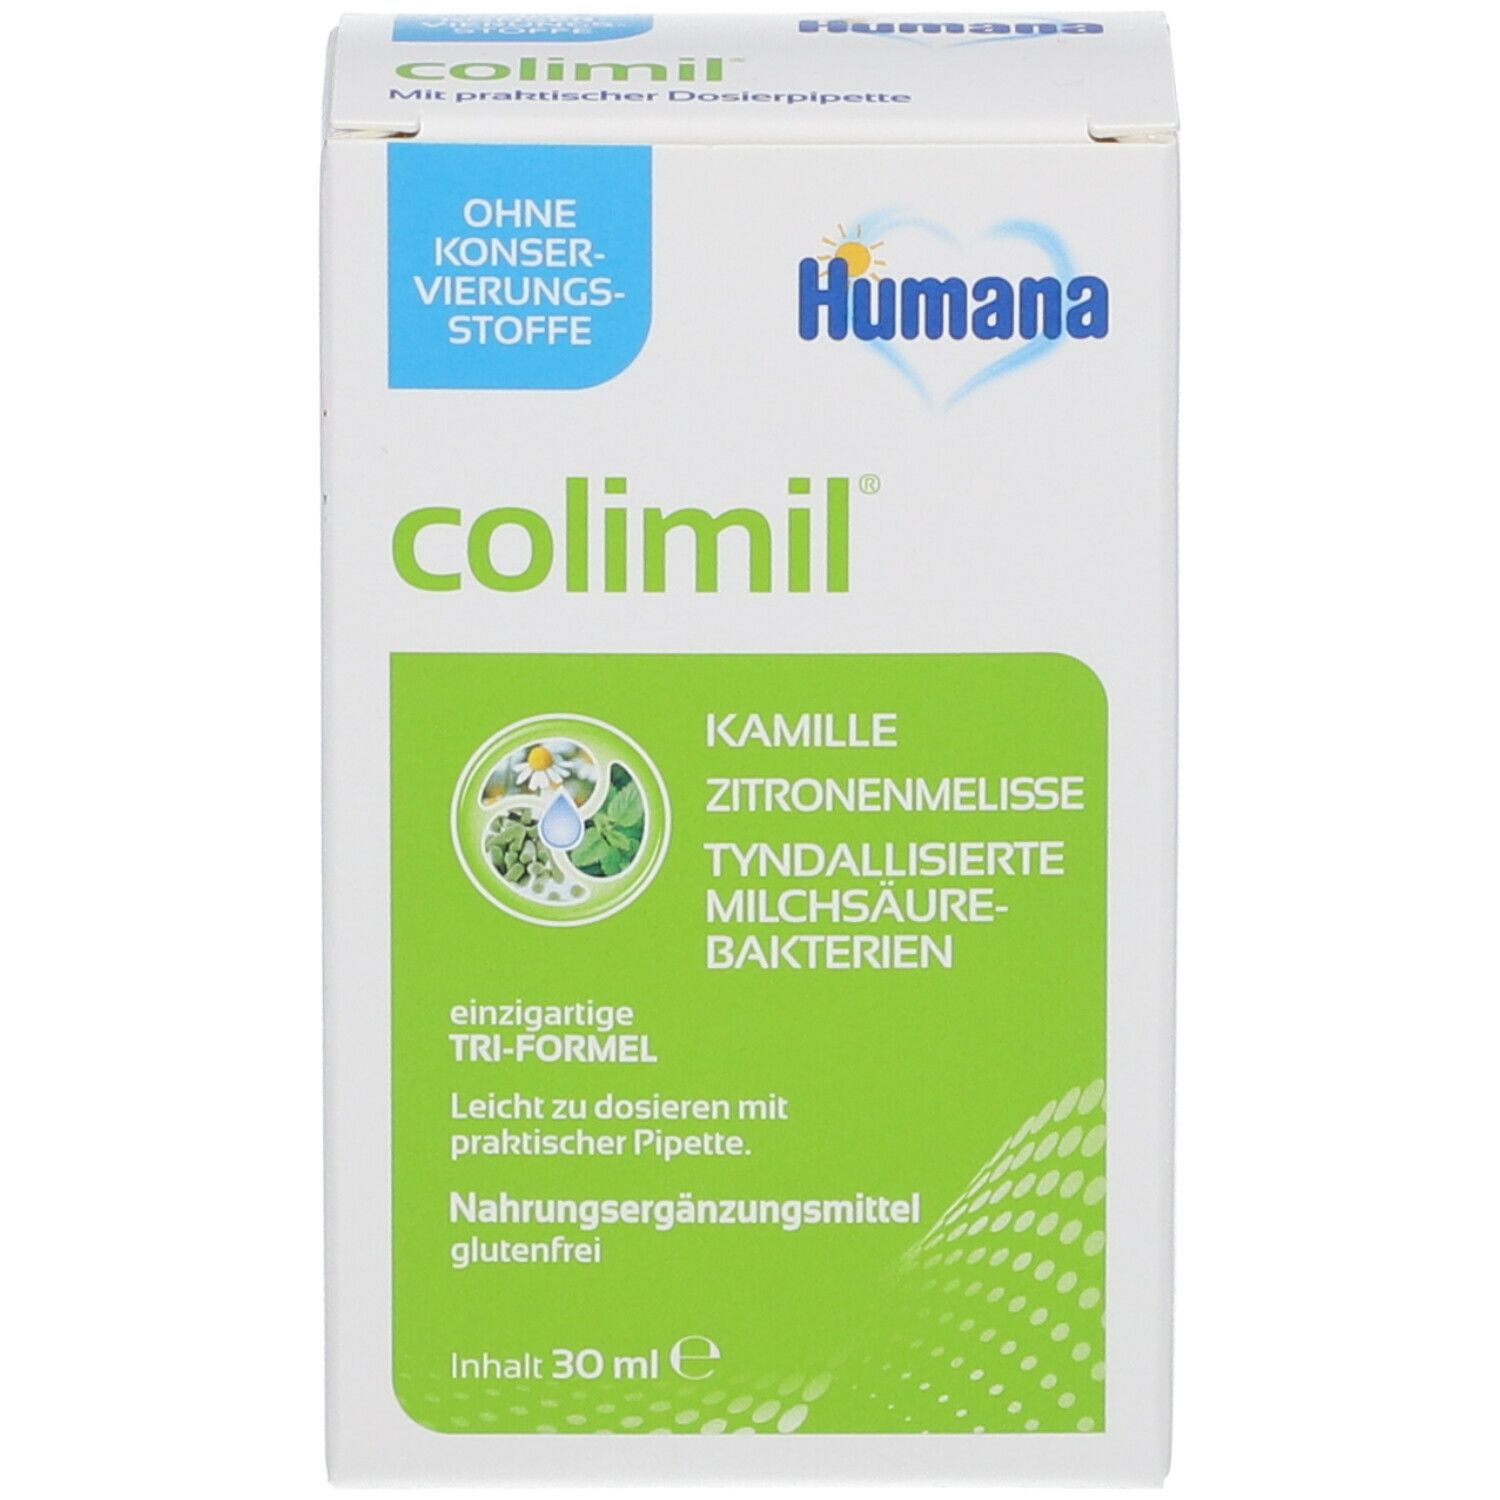 Humana colimil®